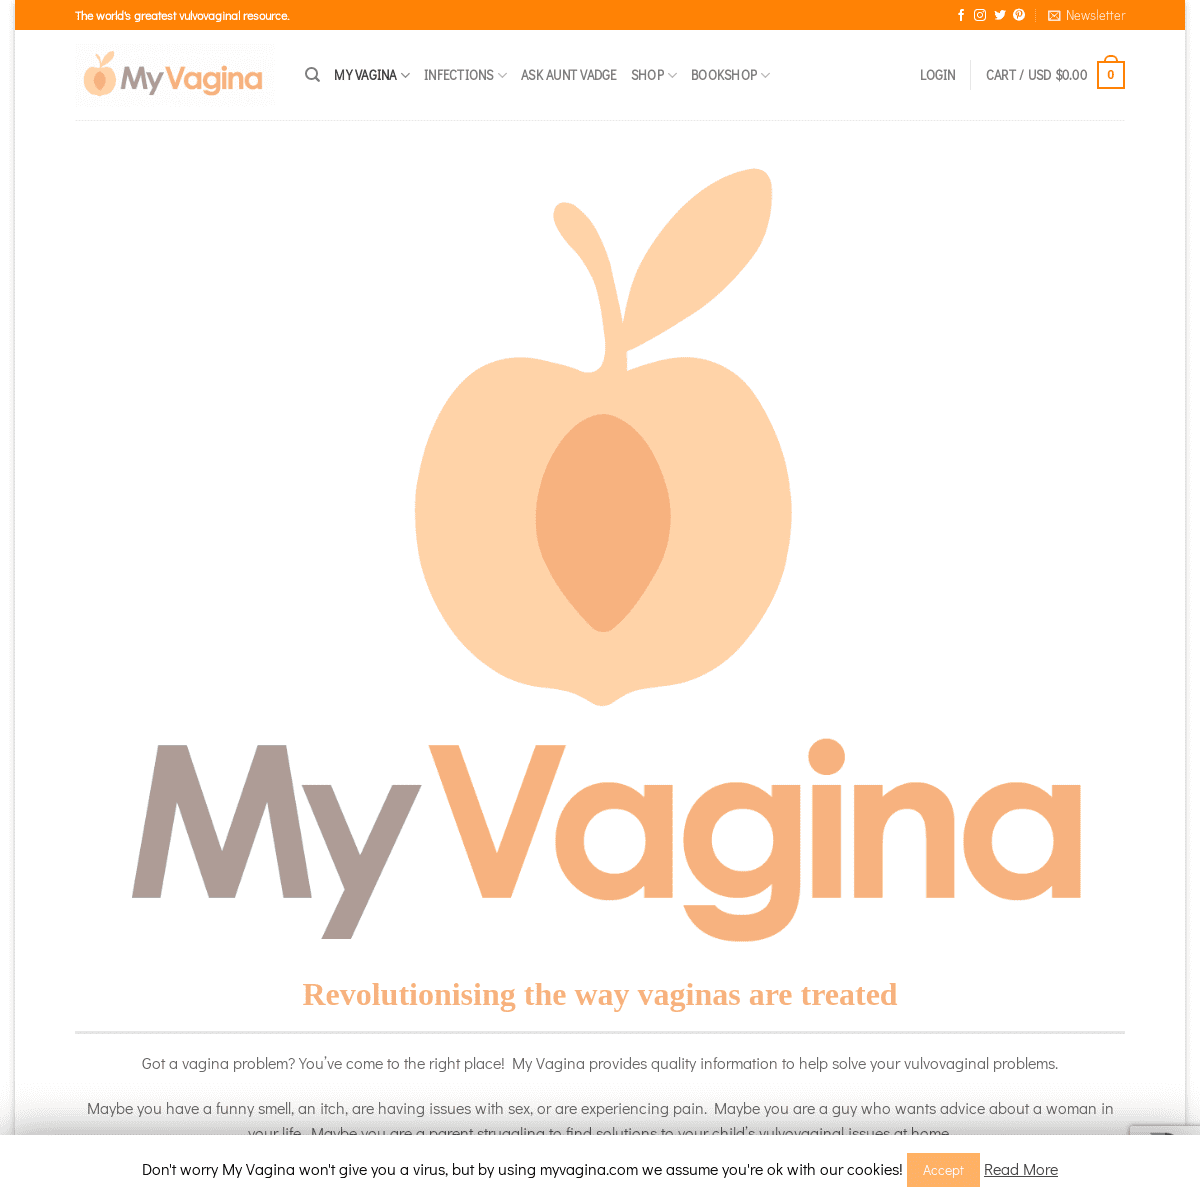 My Vagina - revolutionising the way vaginas are treated